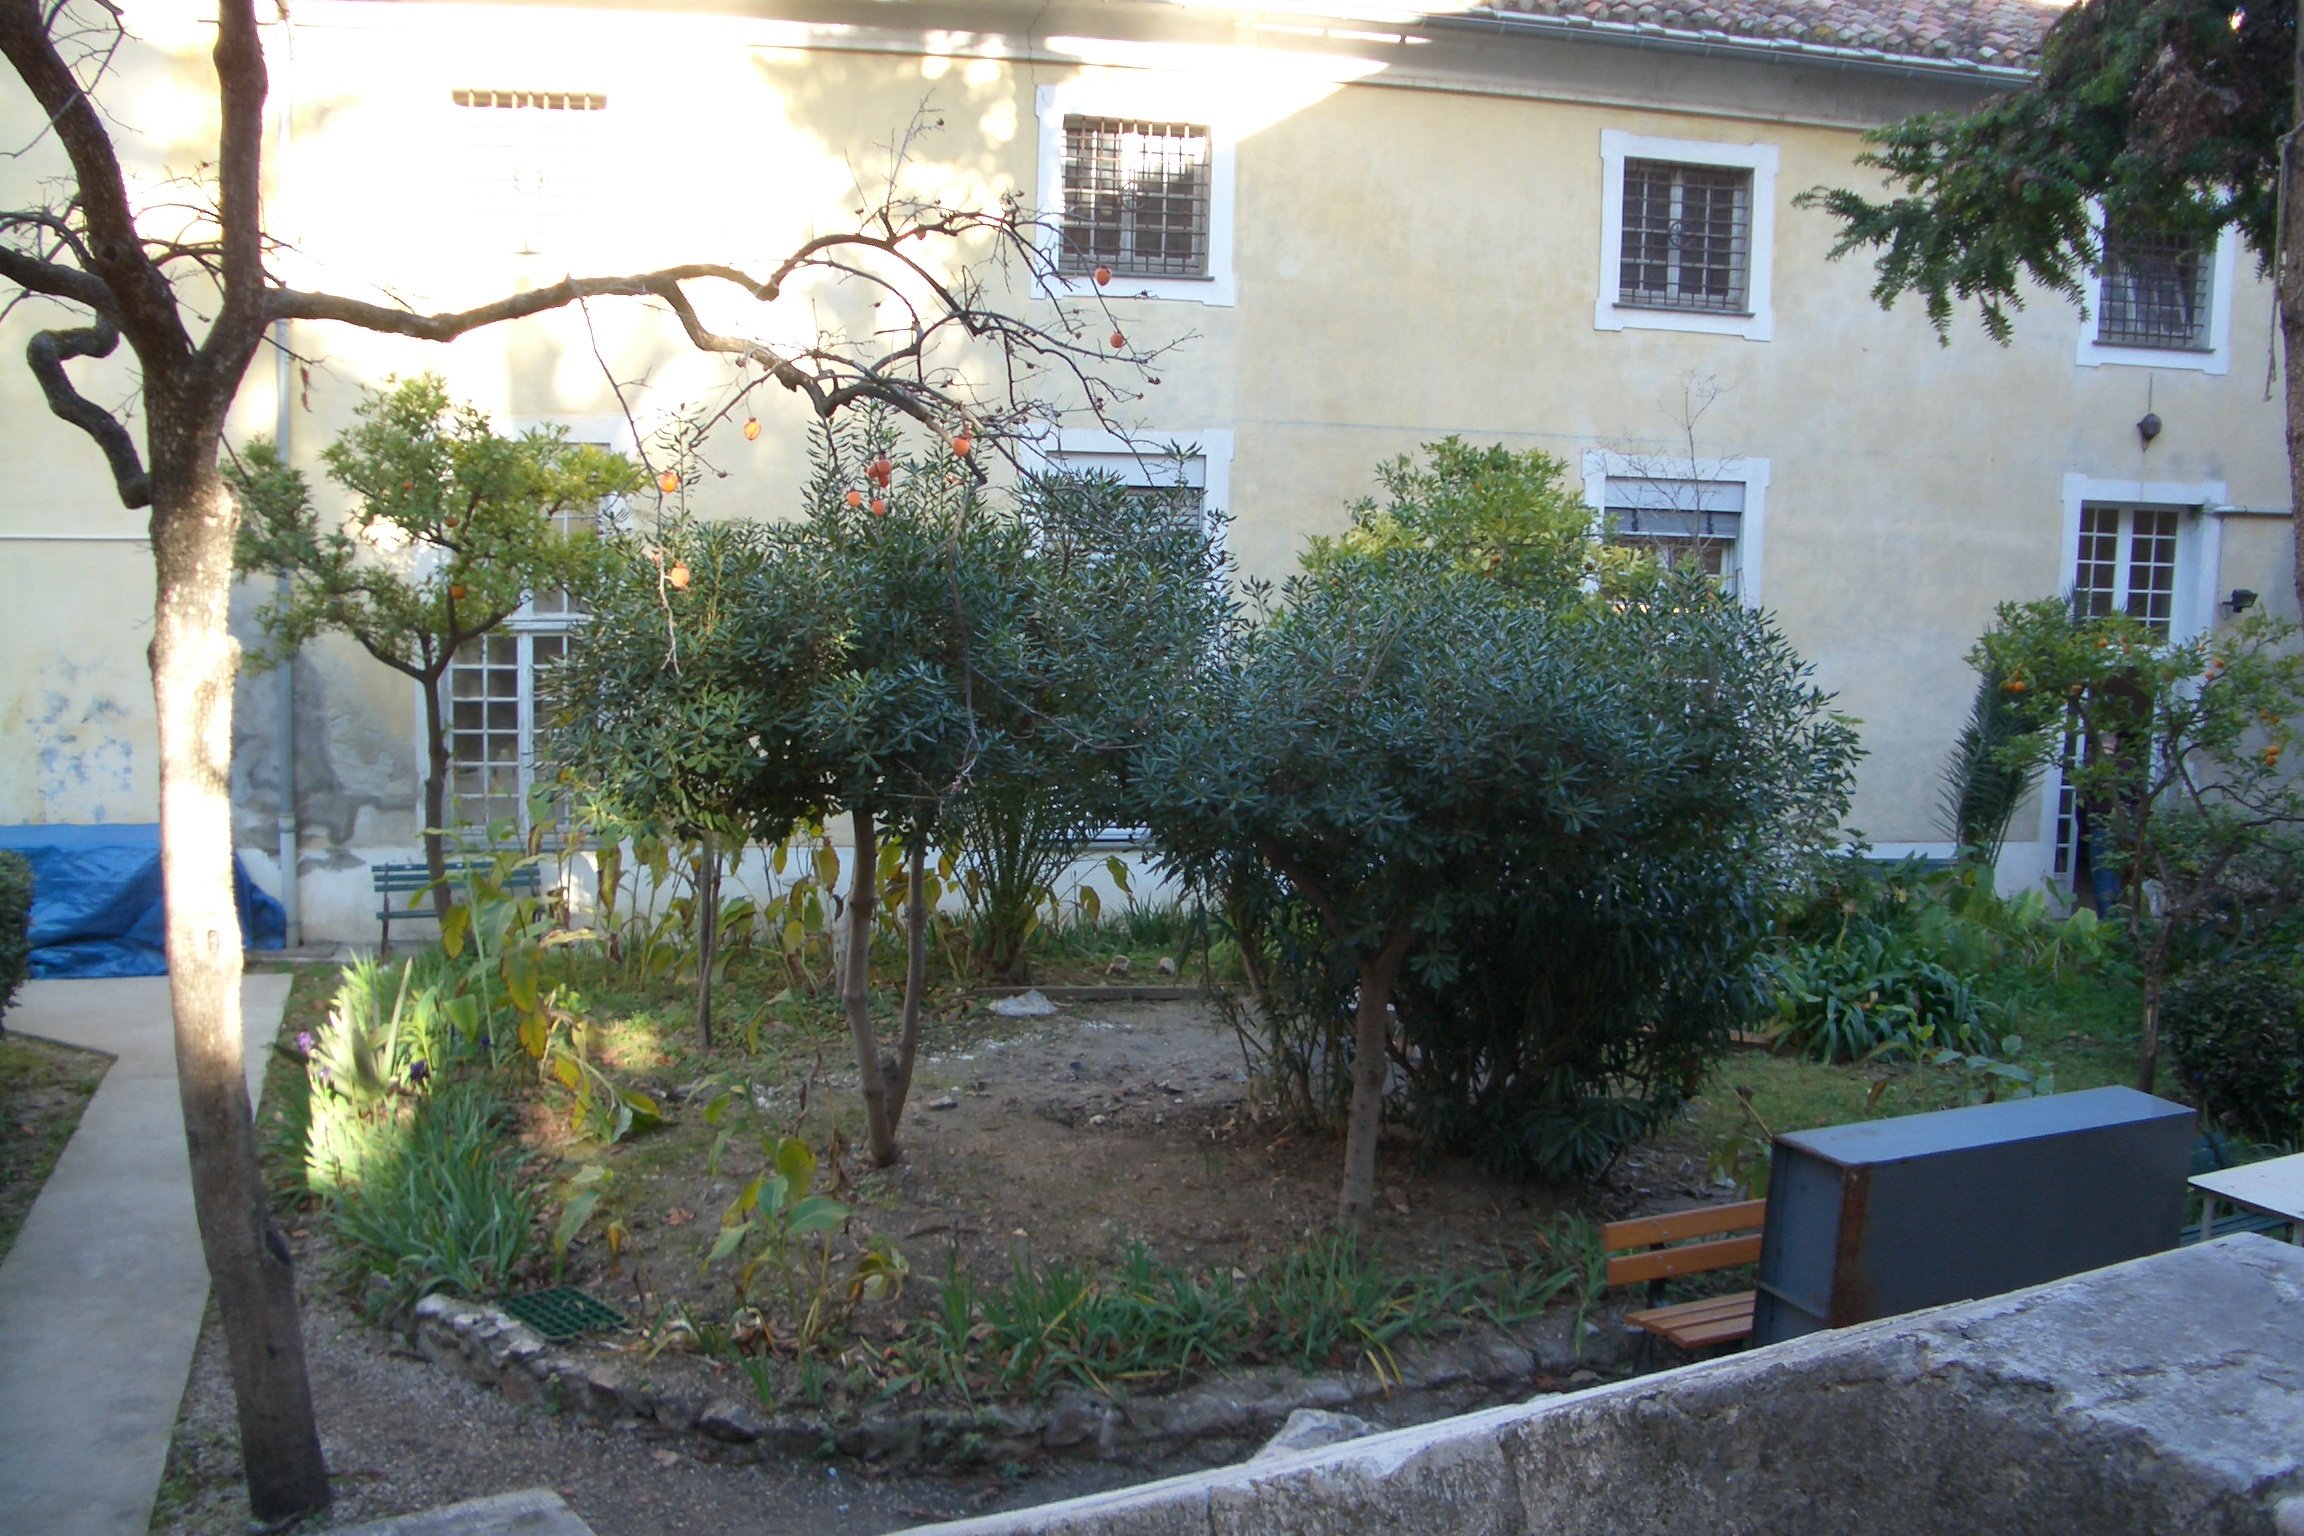 Lower courtyard